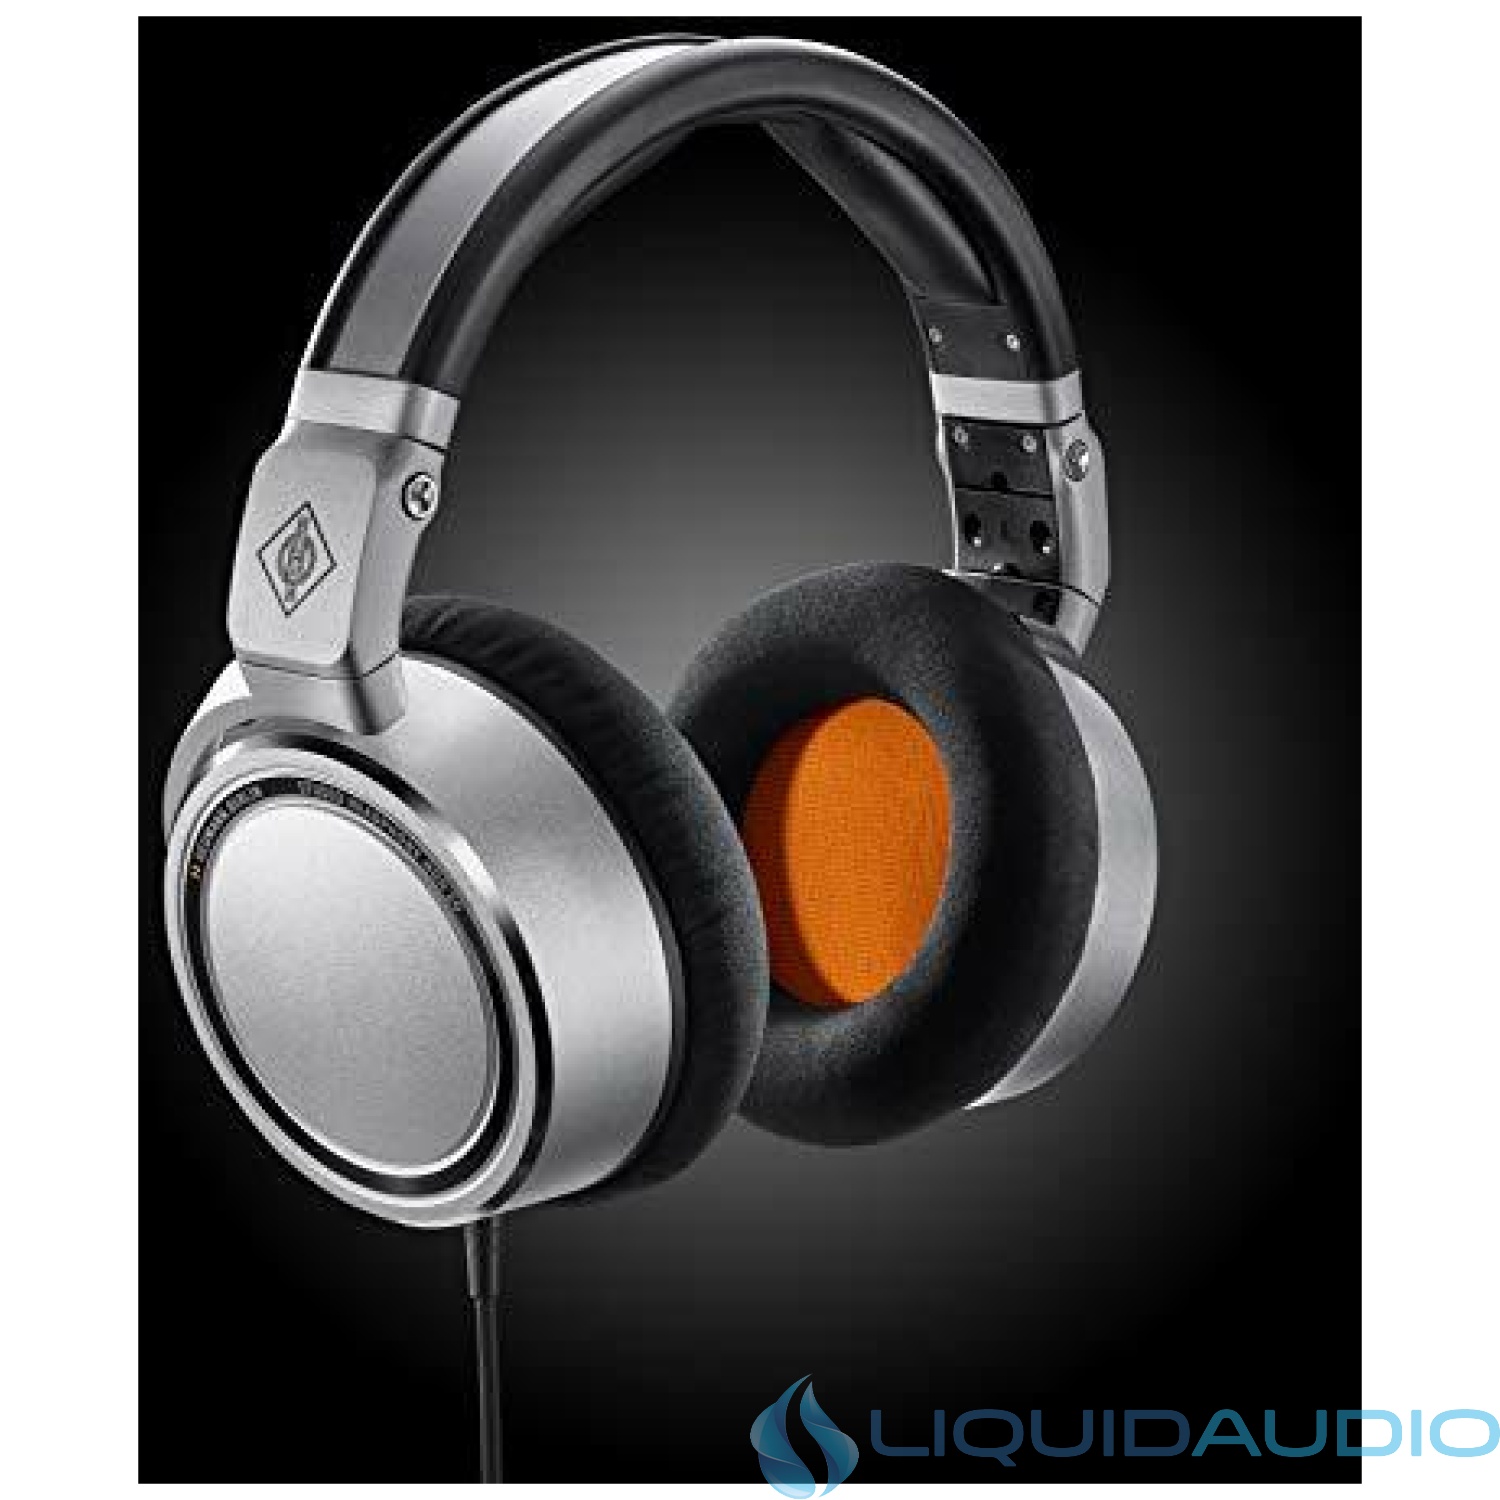 Neumann Studio Headphones (NDH 20 Closed-Back Monitoring He